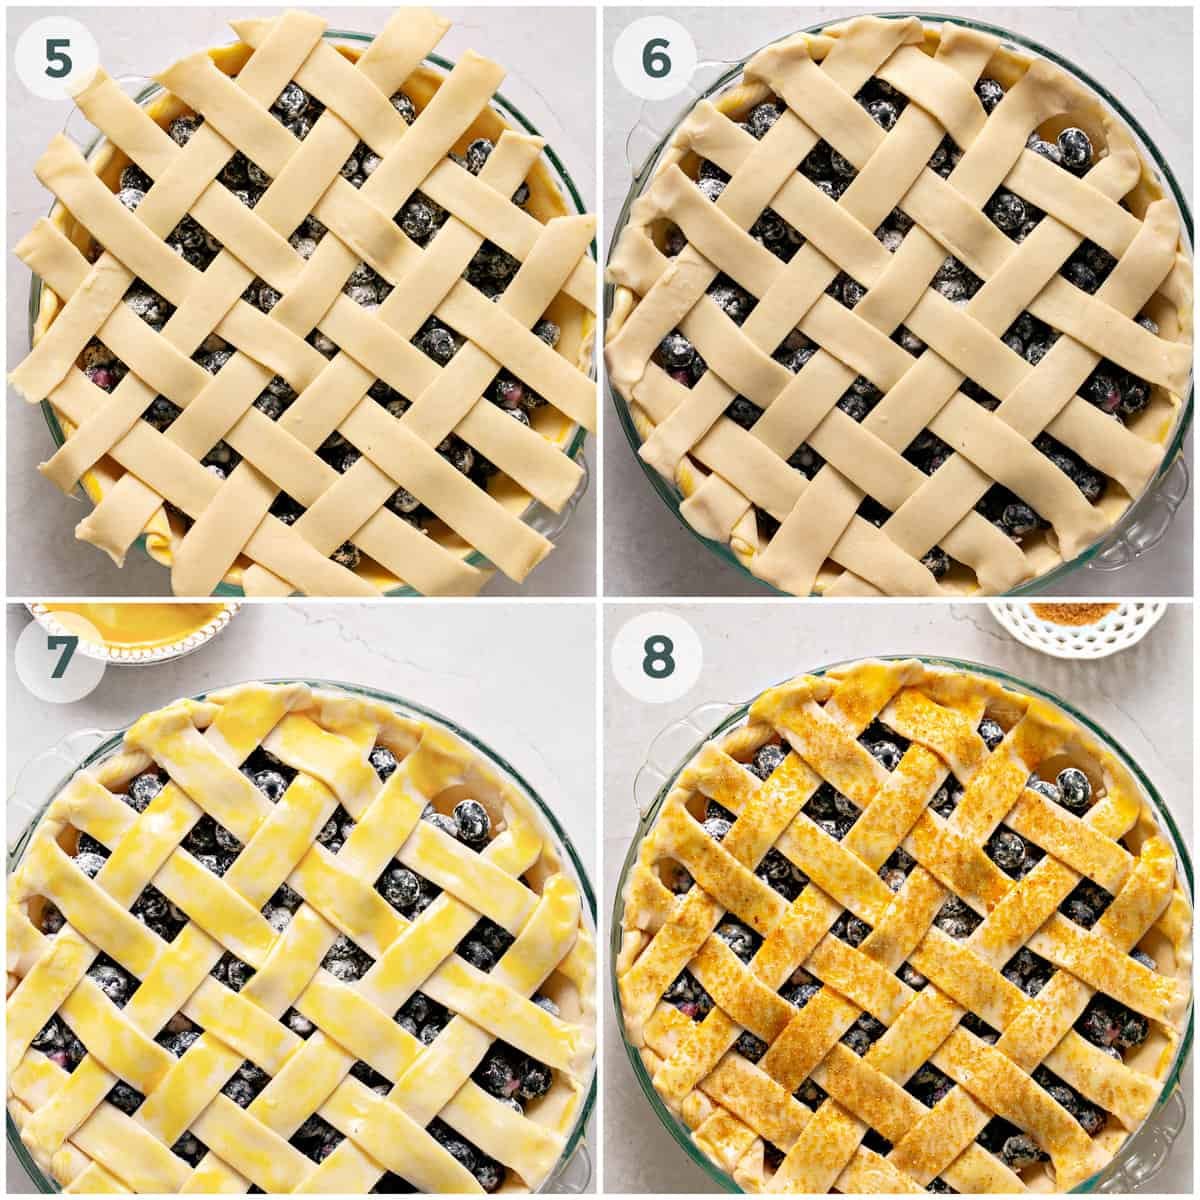 final four steps of preparing blueberry pie recipe